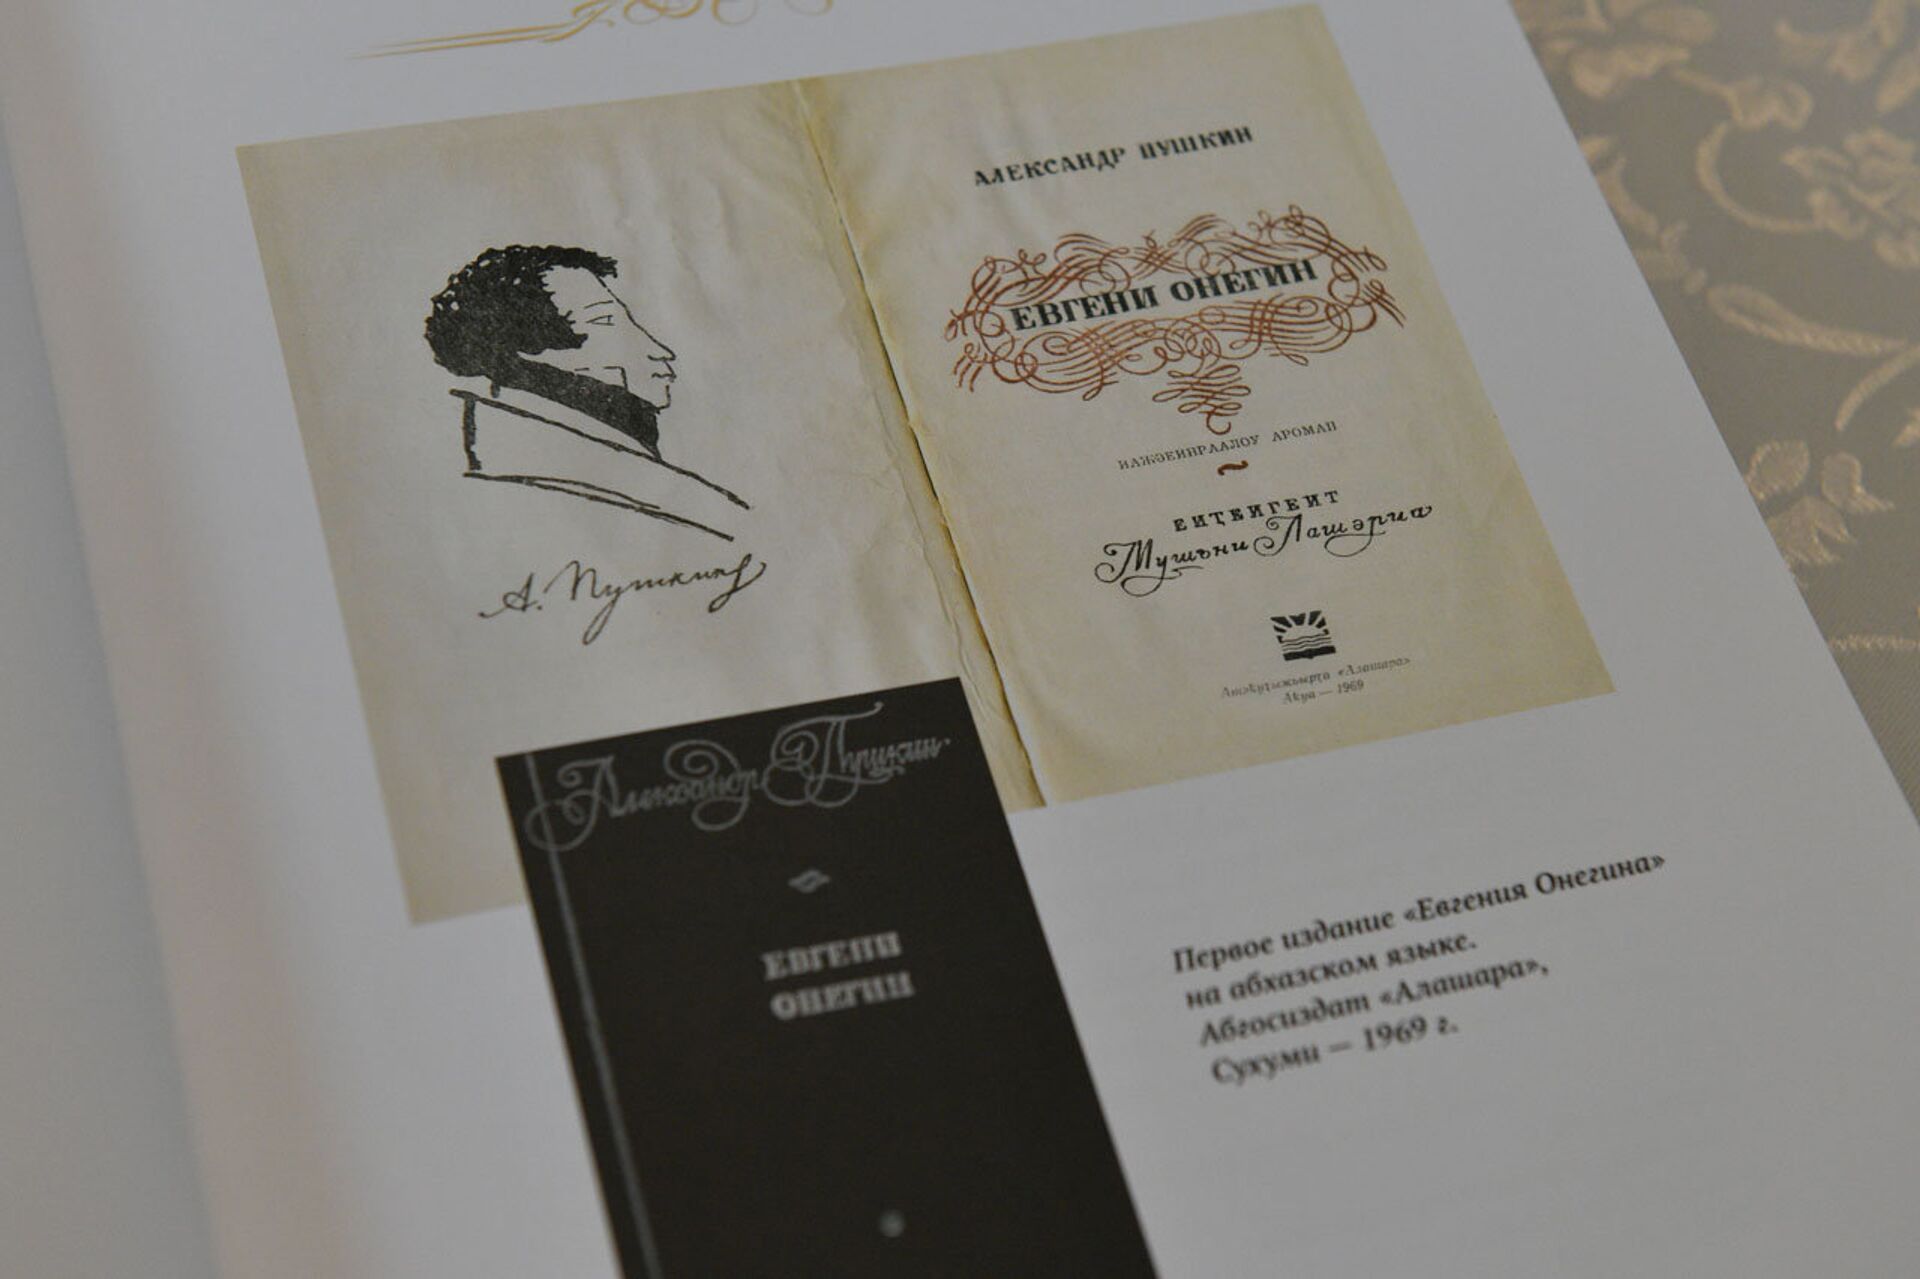 Пушкин иахь амҩахәасҭа: аурыс литература аклассик имшира аҳаҭыразы - Sputnik Аҧсны, 1920, 06.06.2021